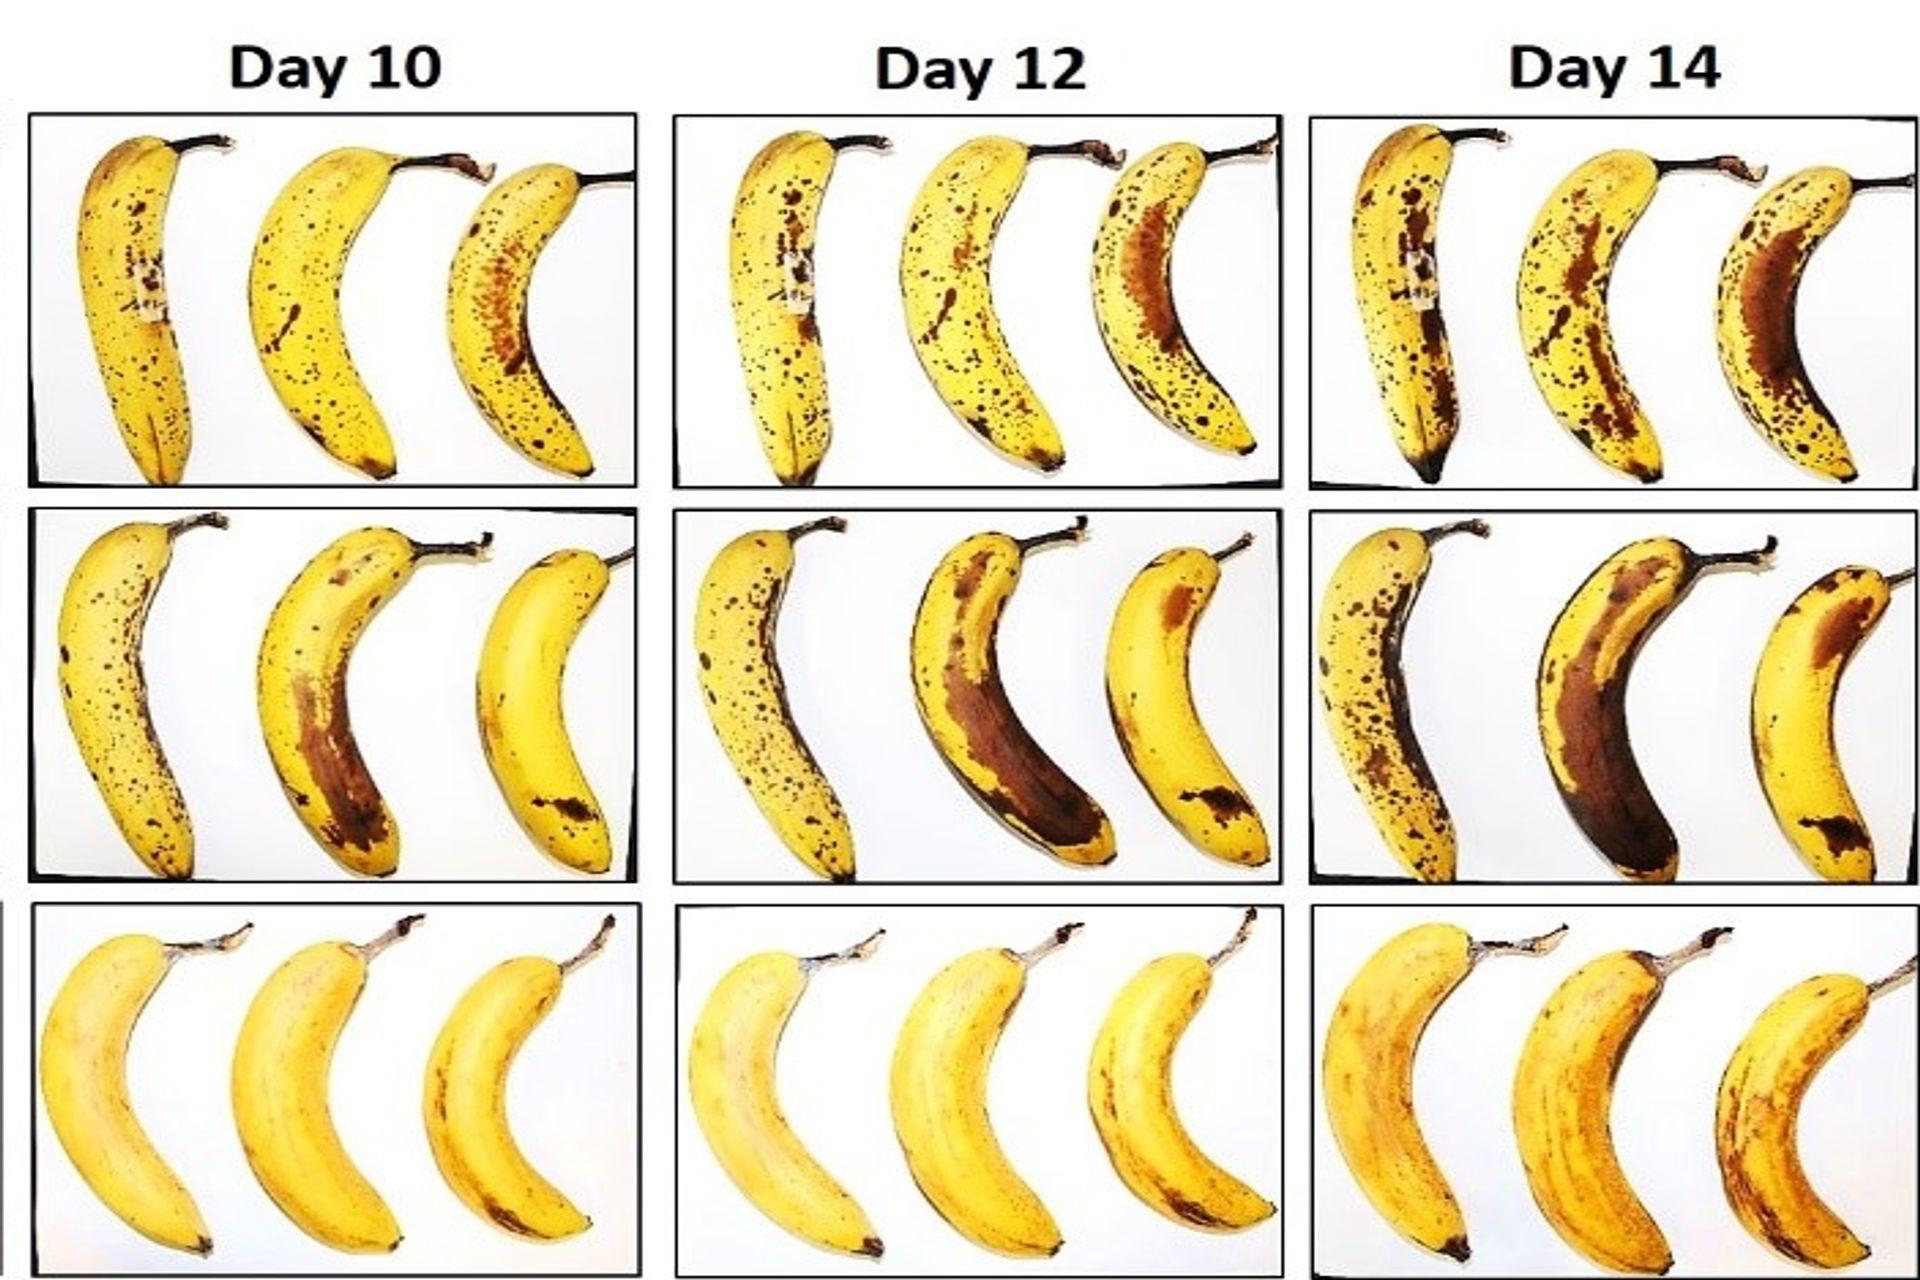 EMPA 和 Lidl Switzerland 在 10、12 和 14 天后对三种香蕉进行了有和没有纤维状纤维素包裹的保存测试